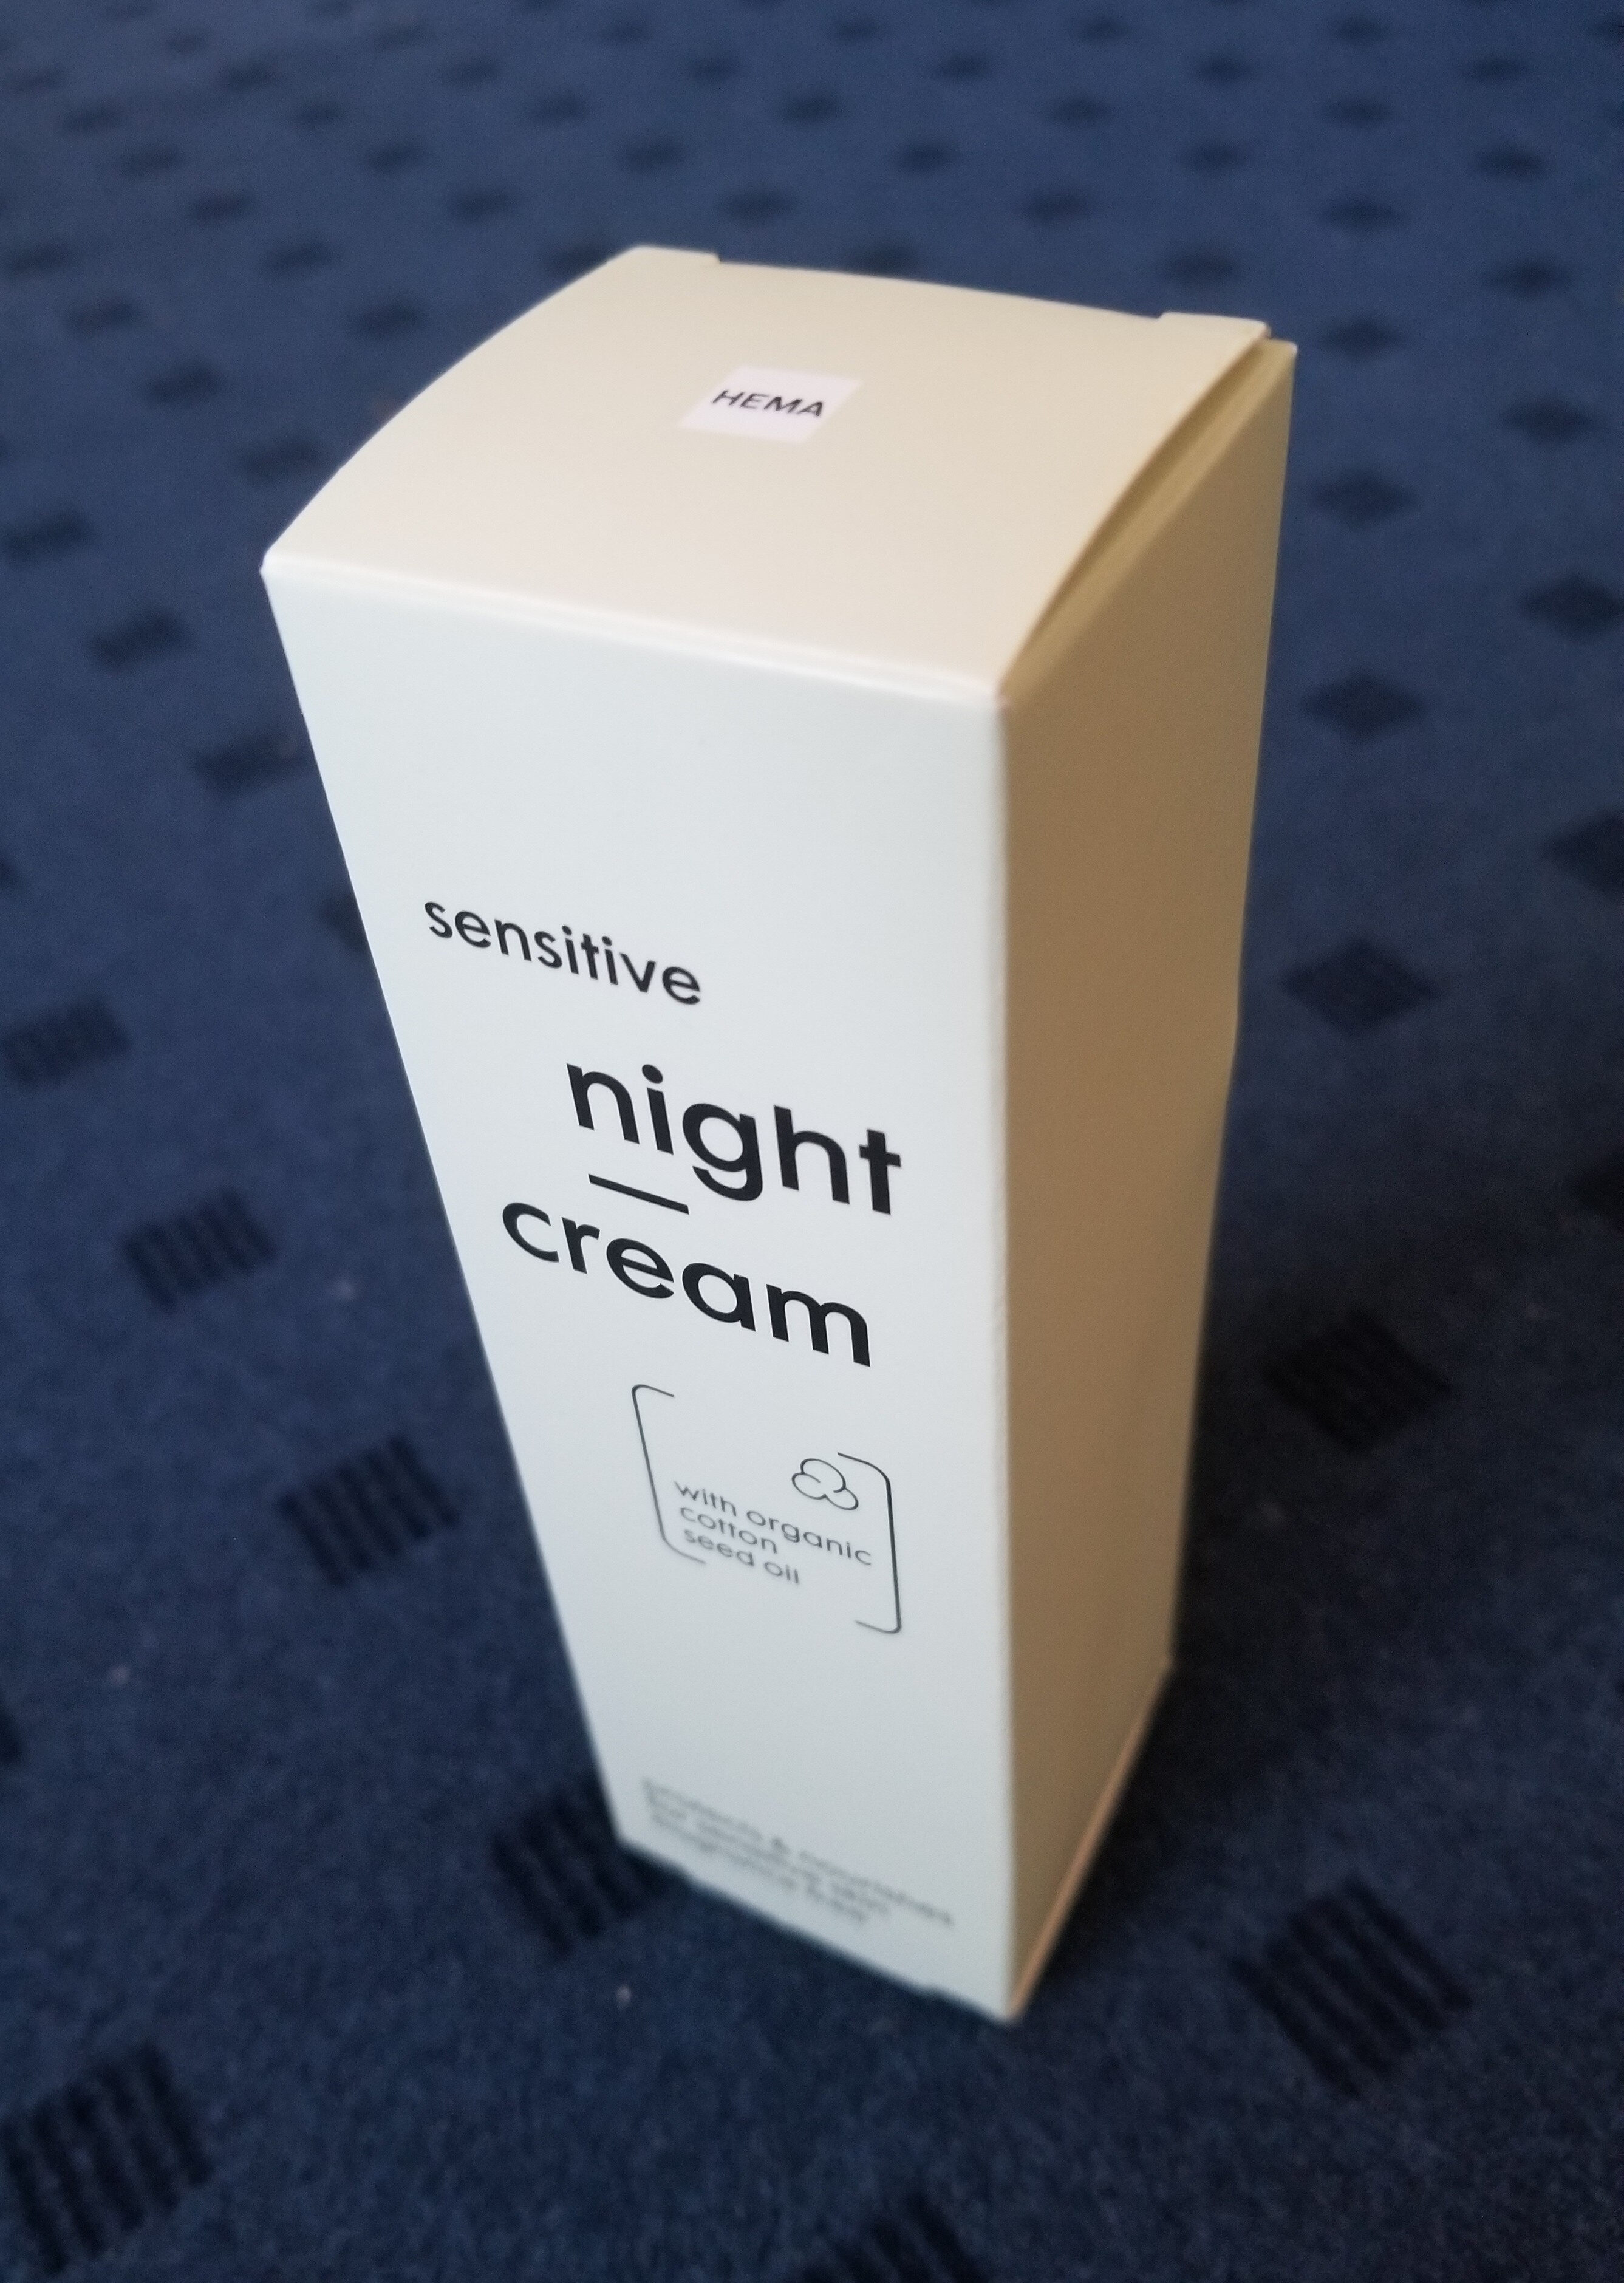 Sensitive night cream - Produit - fr